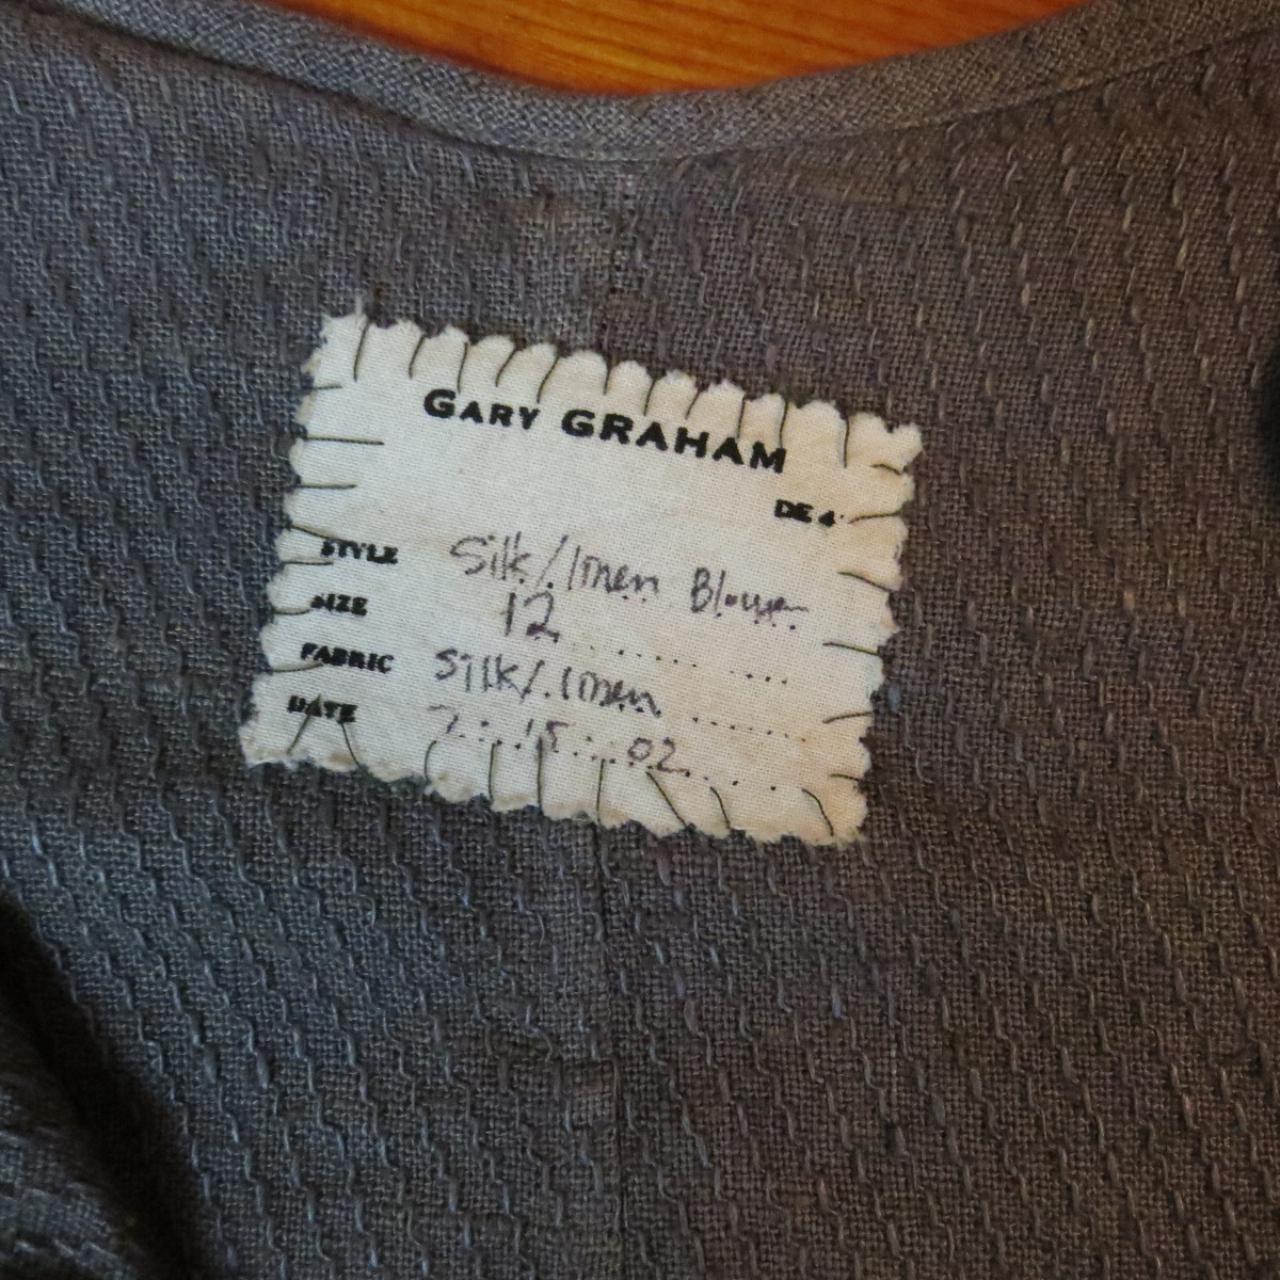 Product Image 3 - Vintage 2002 Gary Graham blouse

Size